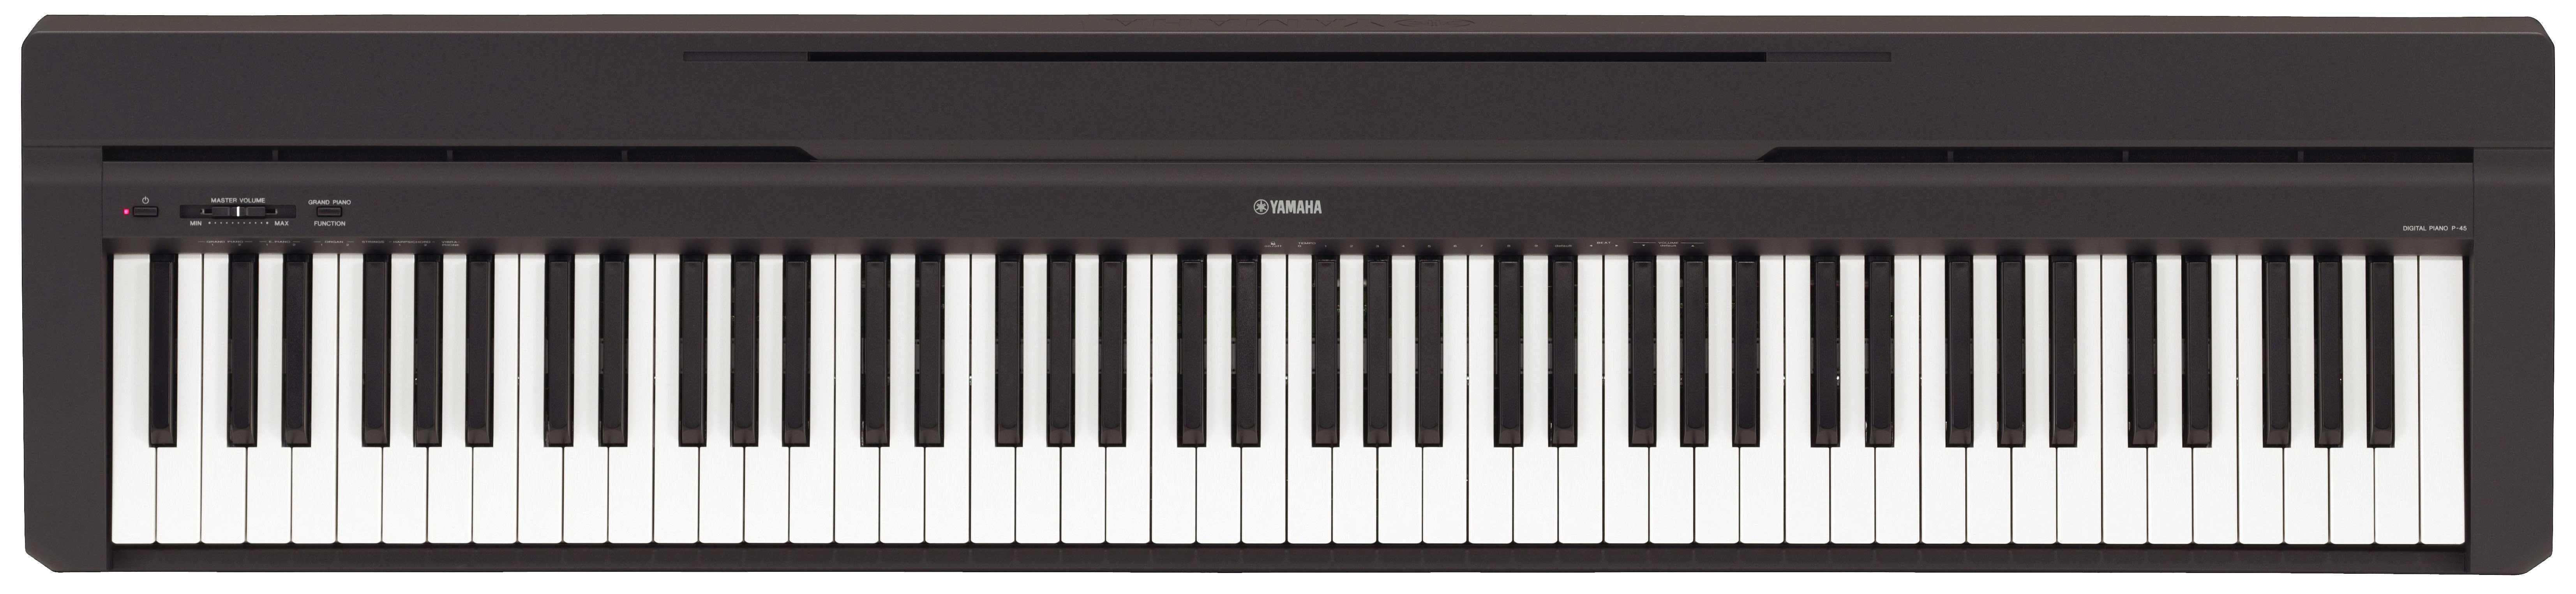 Piano digital Novo P145 Yamaha